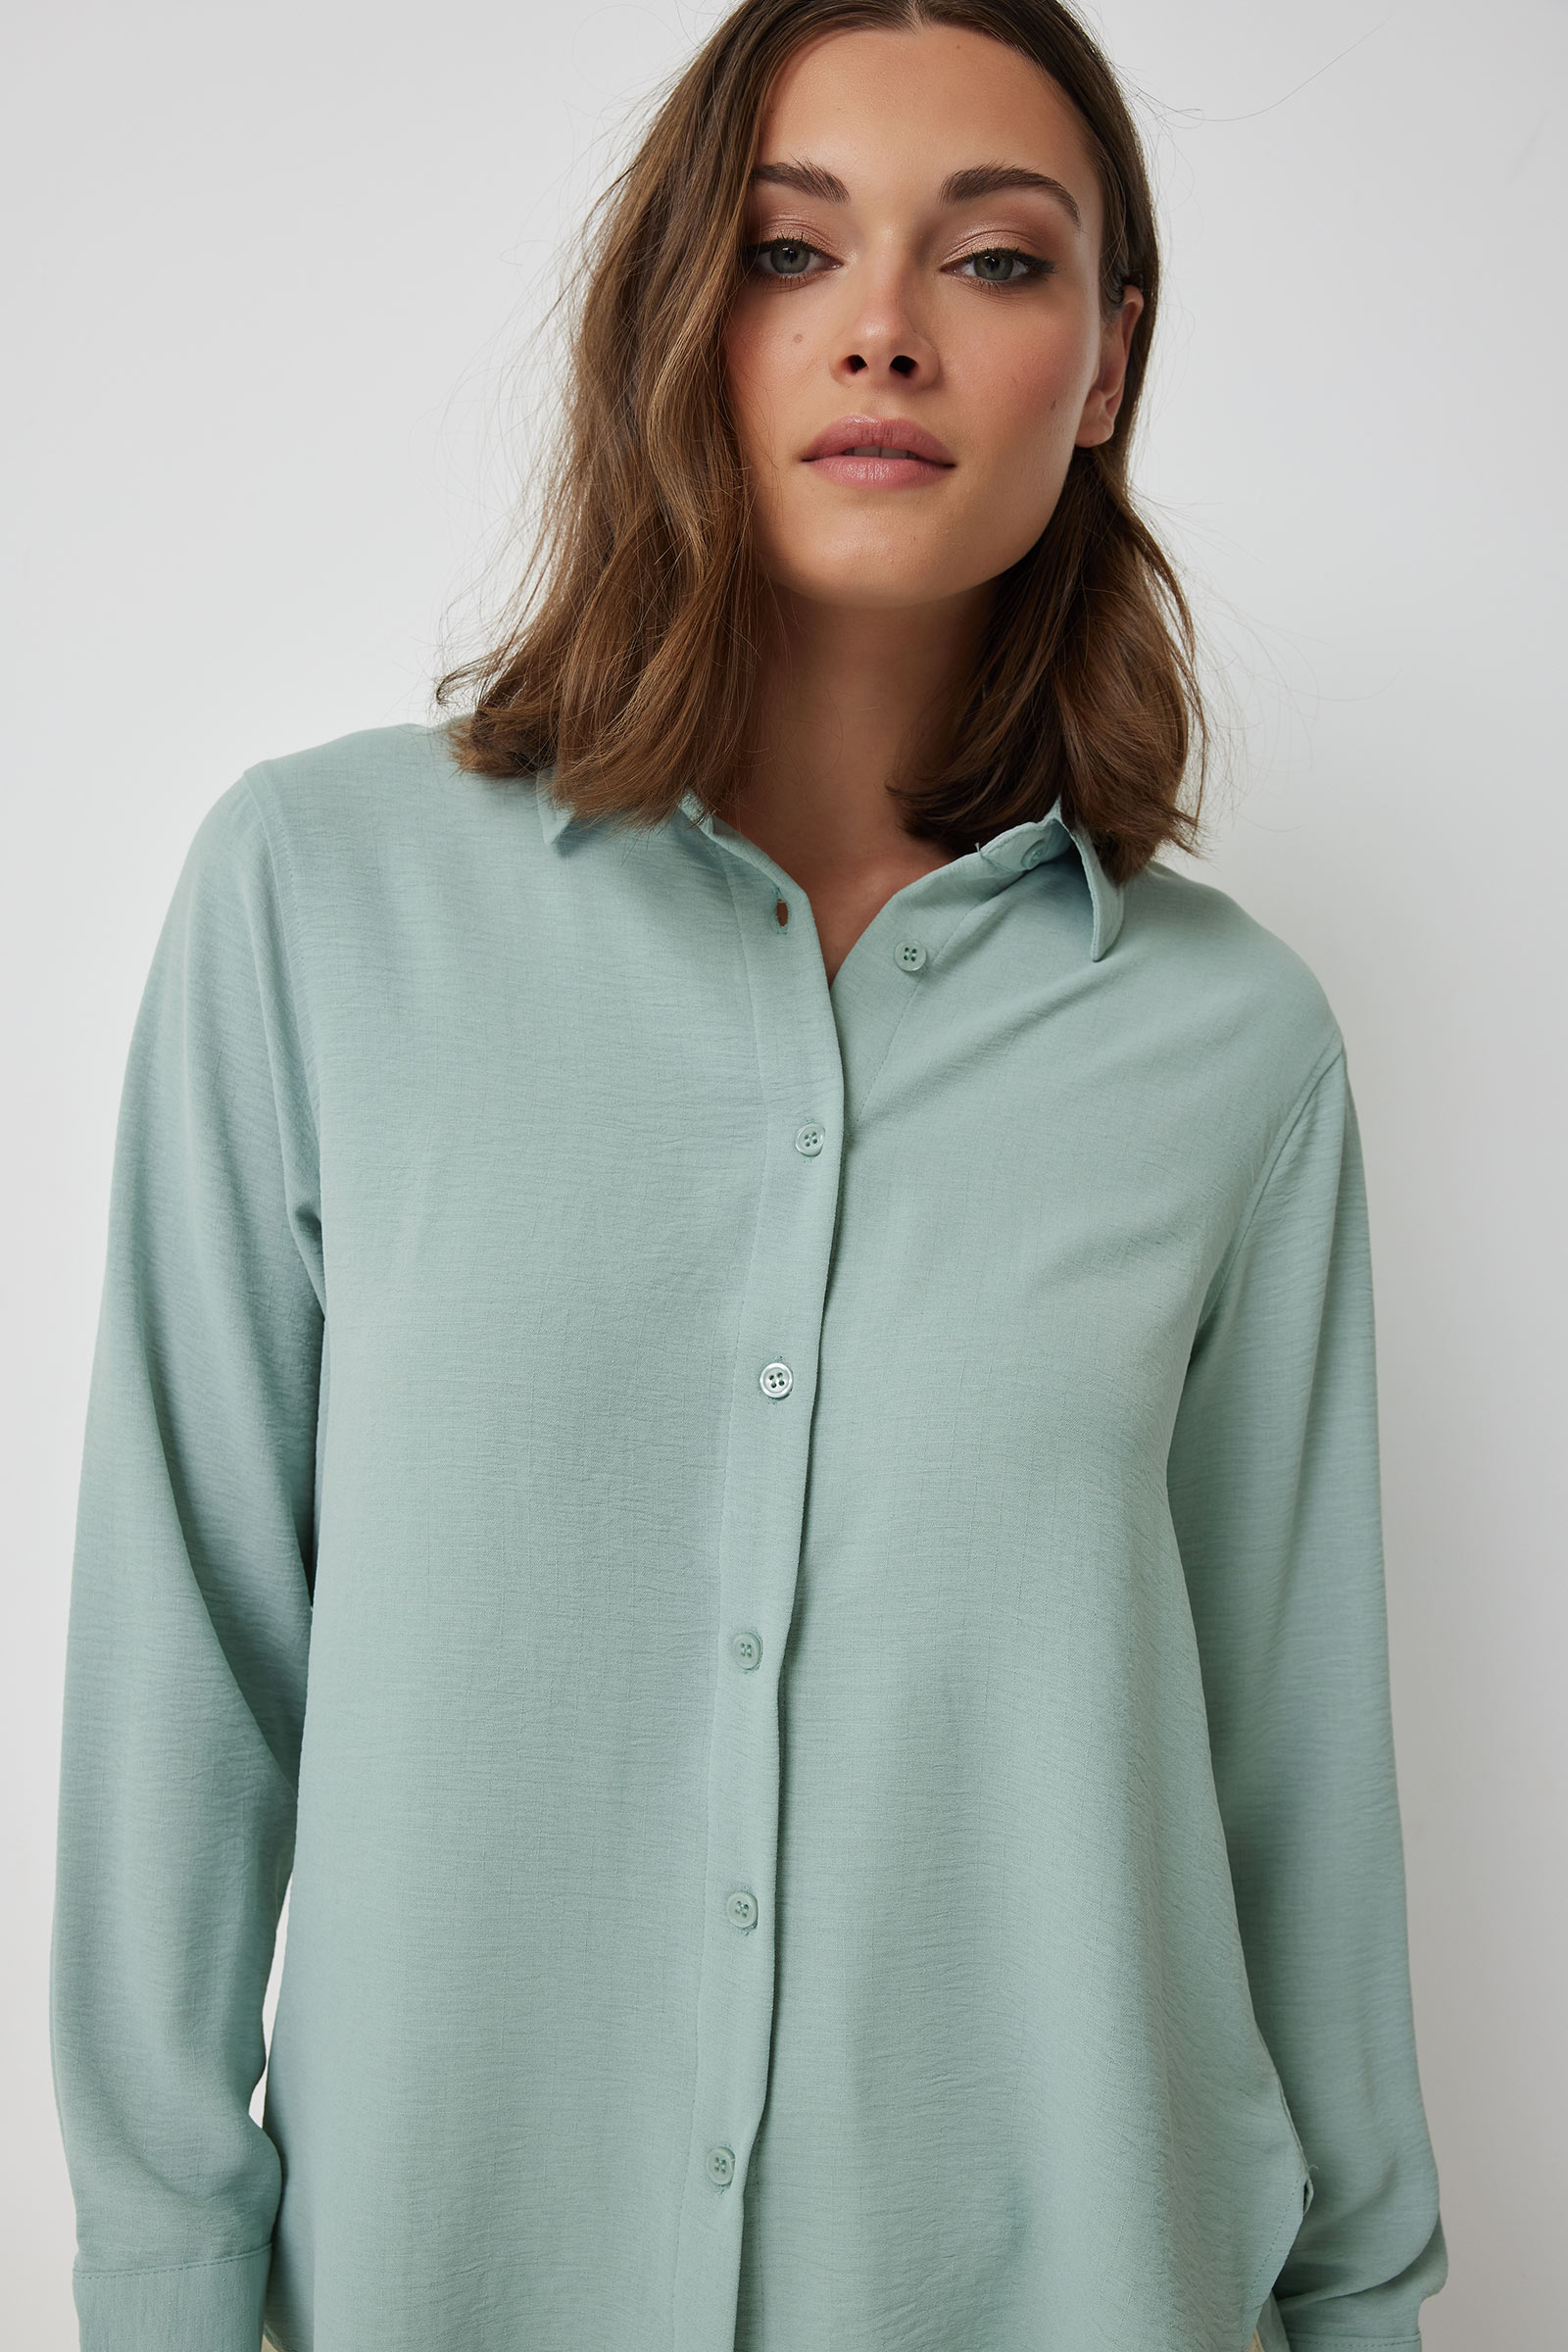 Ardene Airflow Long Sleeve Shirt in Light Green | Size | Polyester